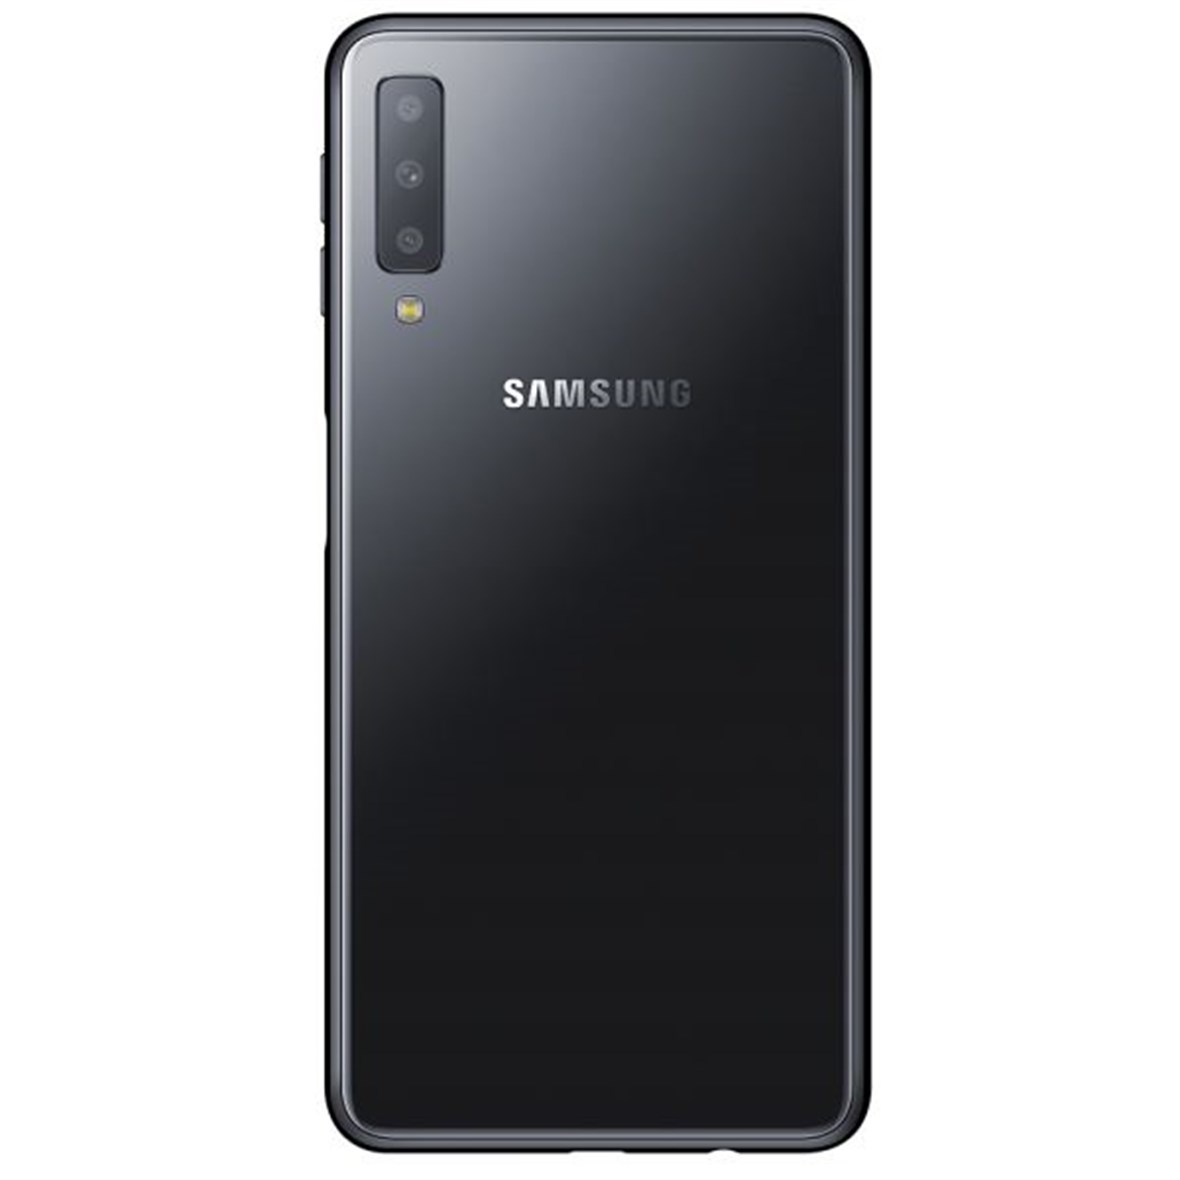 SAMSUNG GALAXY A7 2018 64 GB AKILLI TELEFON BLACK